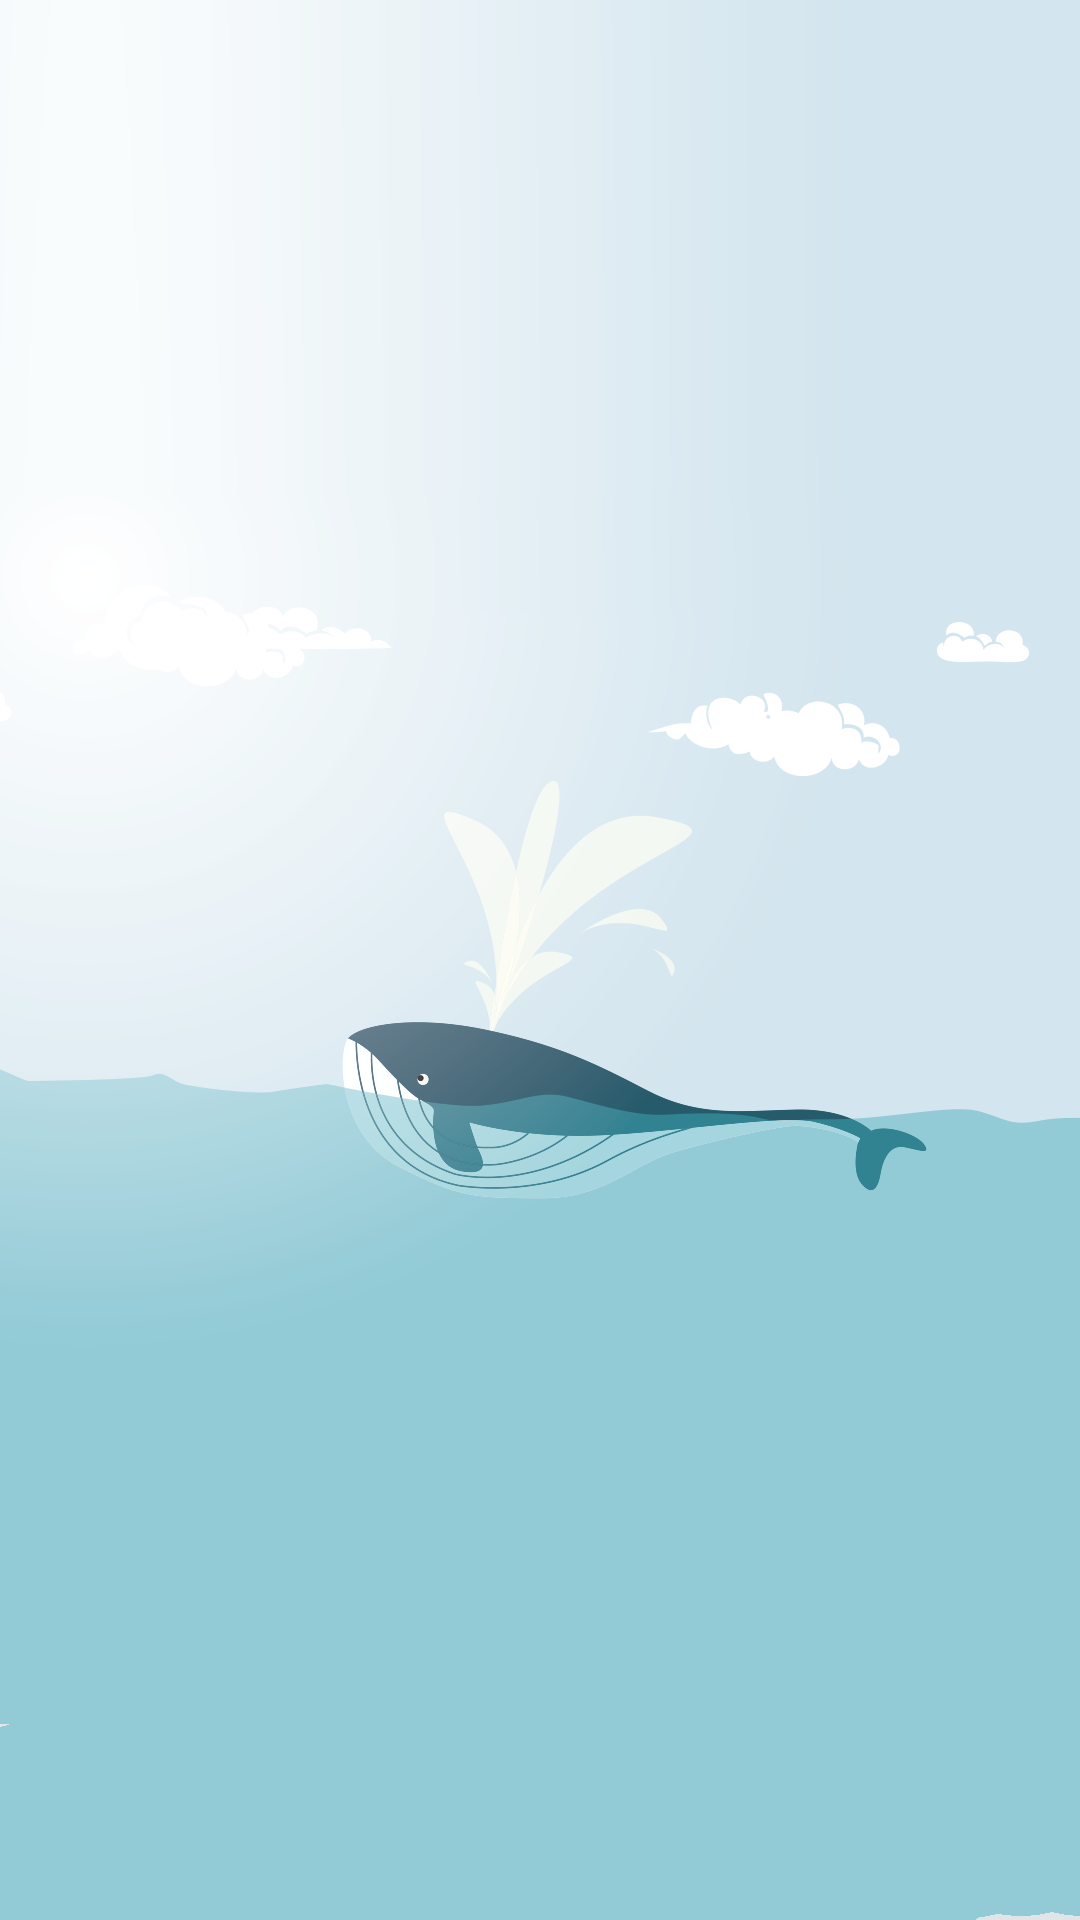 iPhone Wallpaper. Sky, Water, Illustration, Whale, Marine mammal, Sea